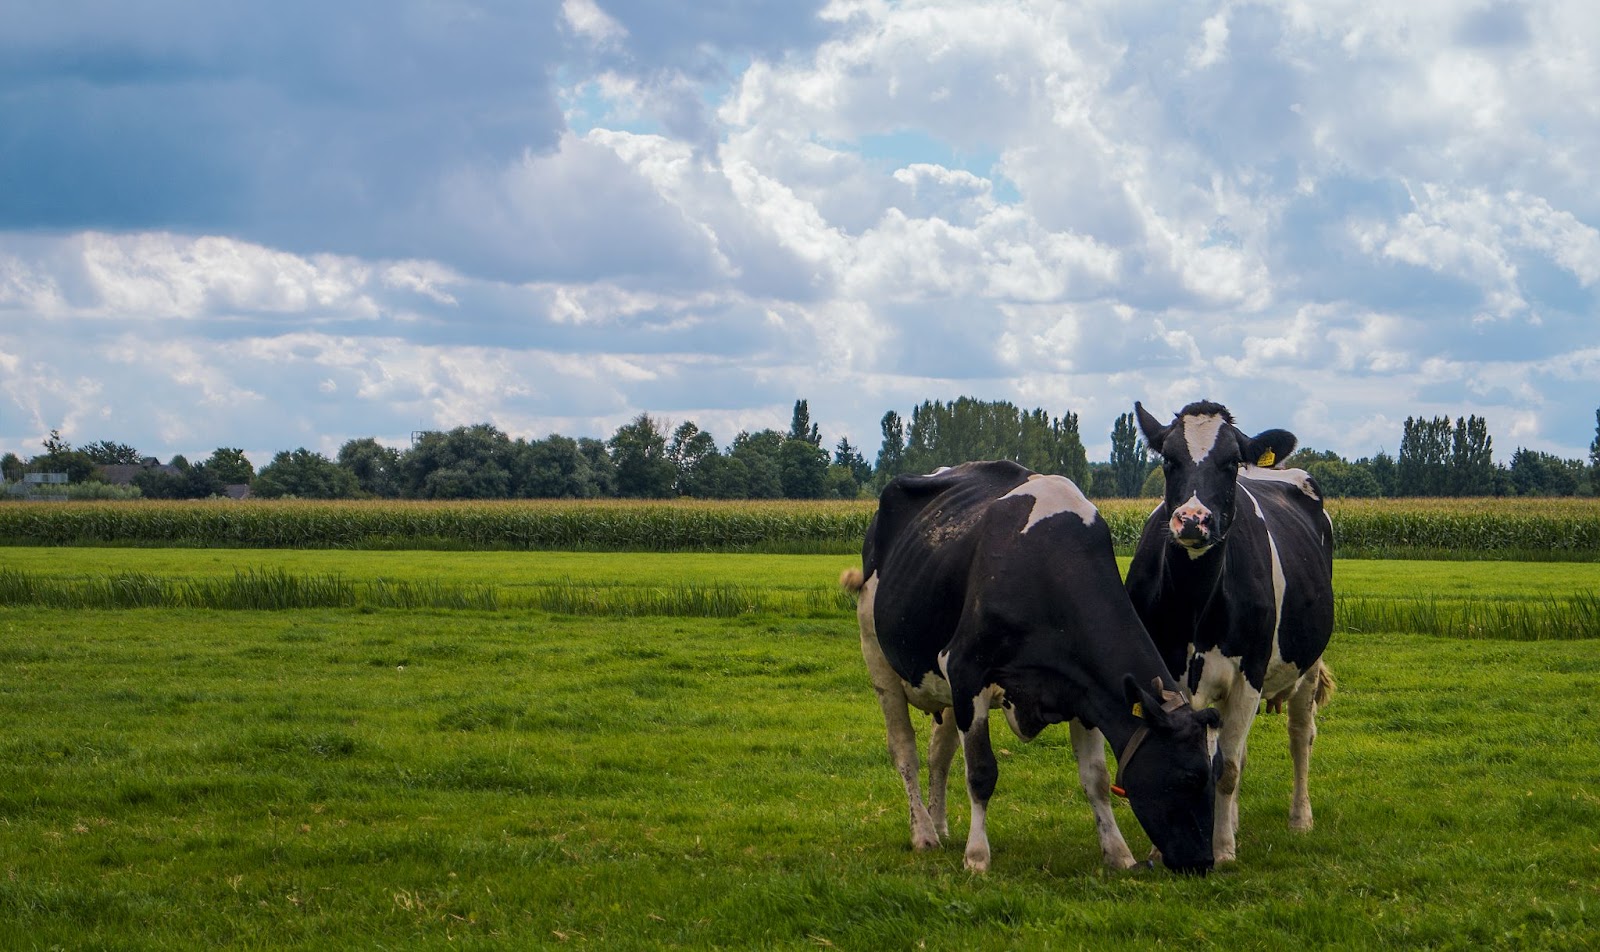 Dutch cows grazing in a field covered in greenery under a blue cloudy sky